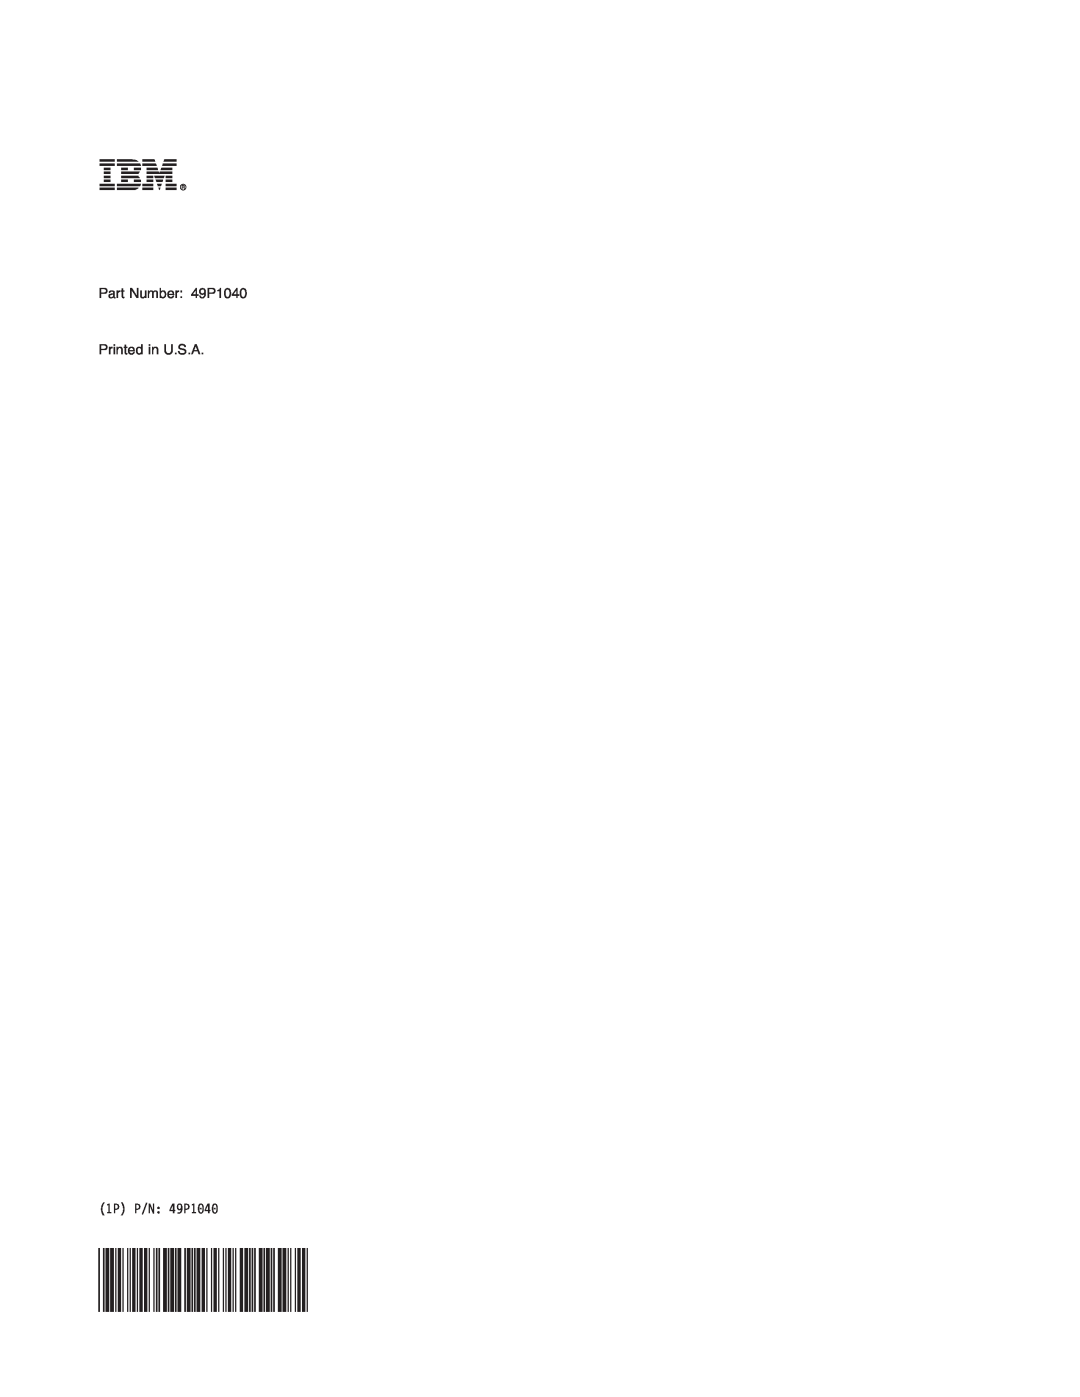 IBM 6824, 2289 manual Part Number 49P1040 Printed in U.S.A, 1P P/N 49P1040 